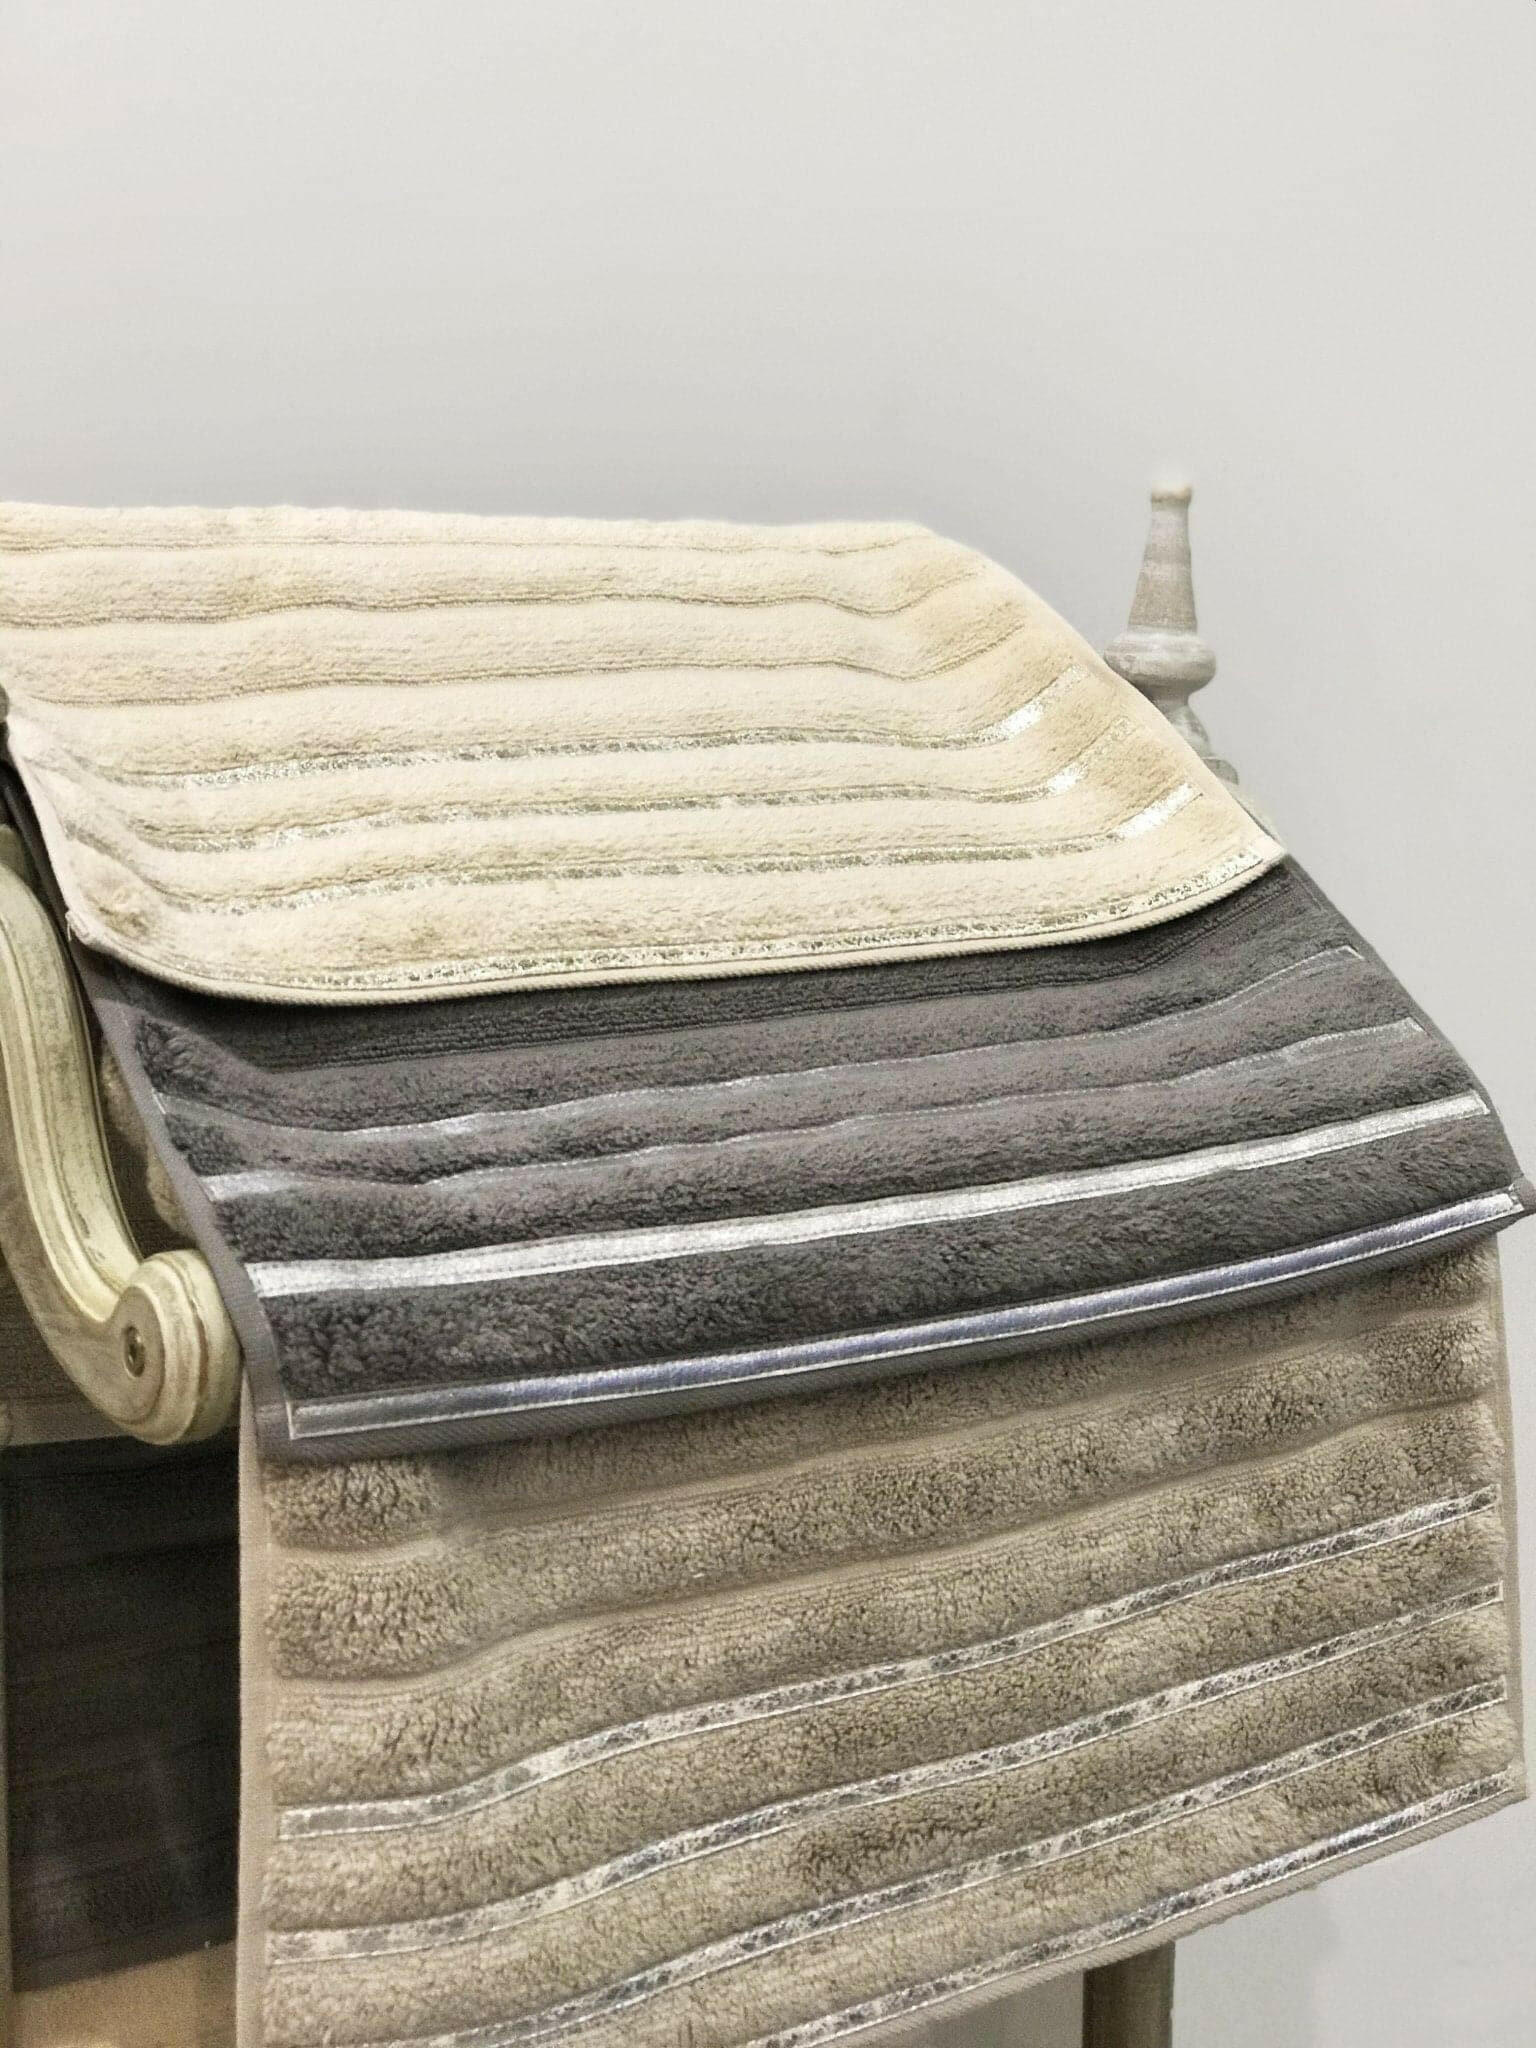 Bera Soft & Luxury Towel Set, Leather Striped Decorative Gold Grey & Dark Gray Colored Bathroom Towels by Creative Home,TS-CSTP-BERA-3F,TS-CSTP-BERA-3B,TS-CSTP-BERA-3F3B